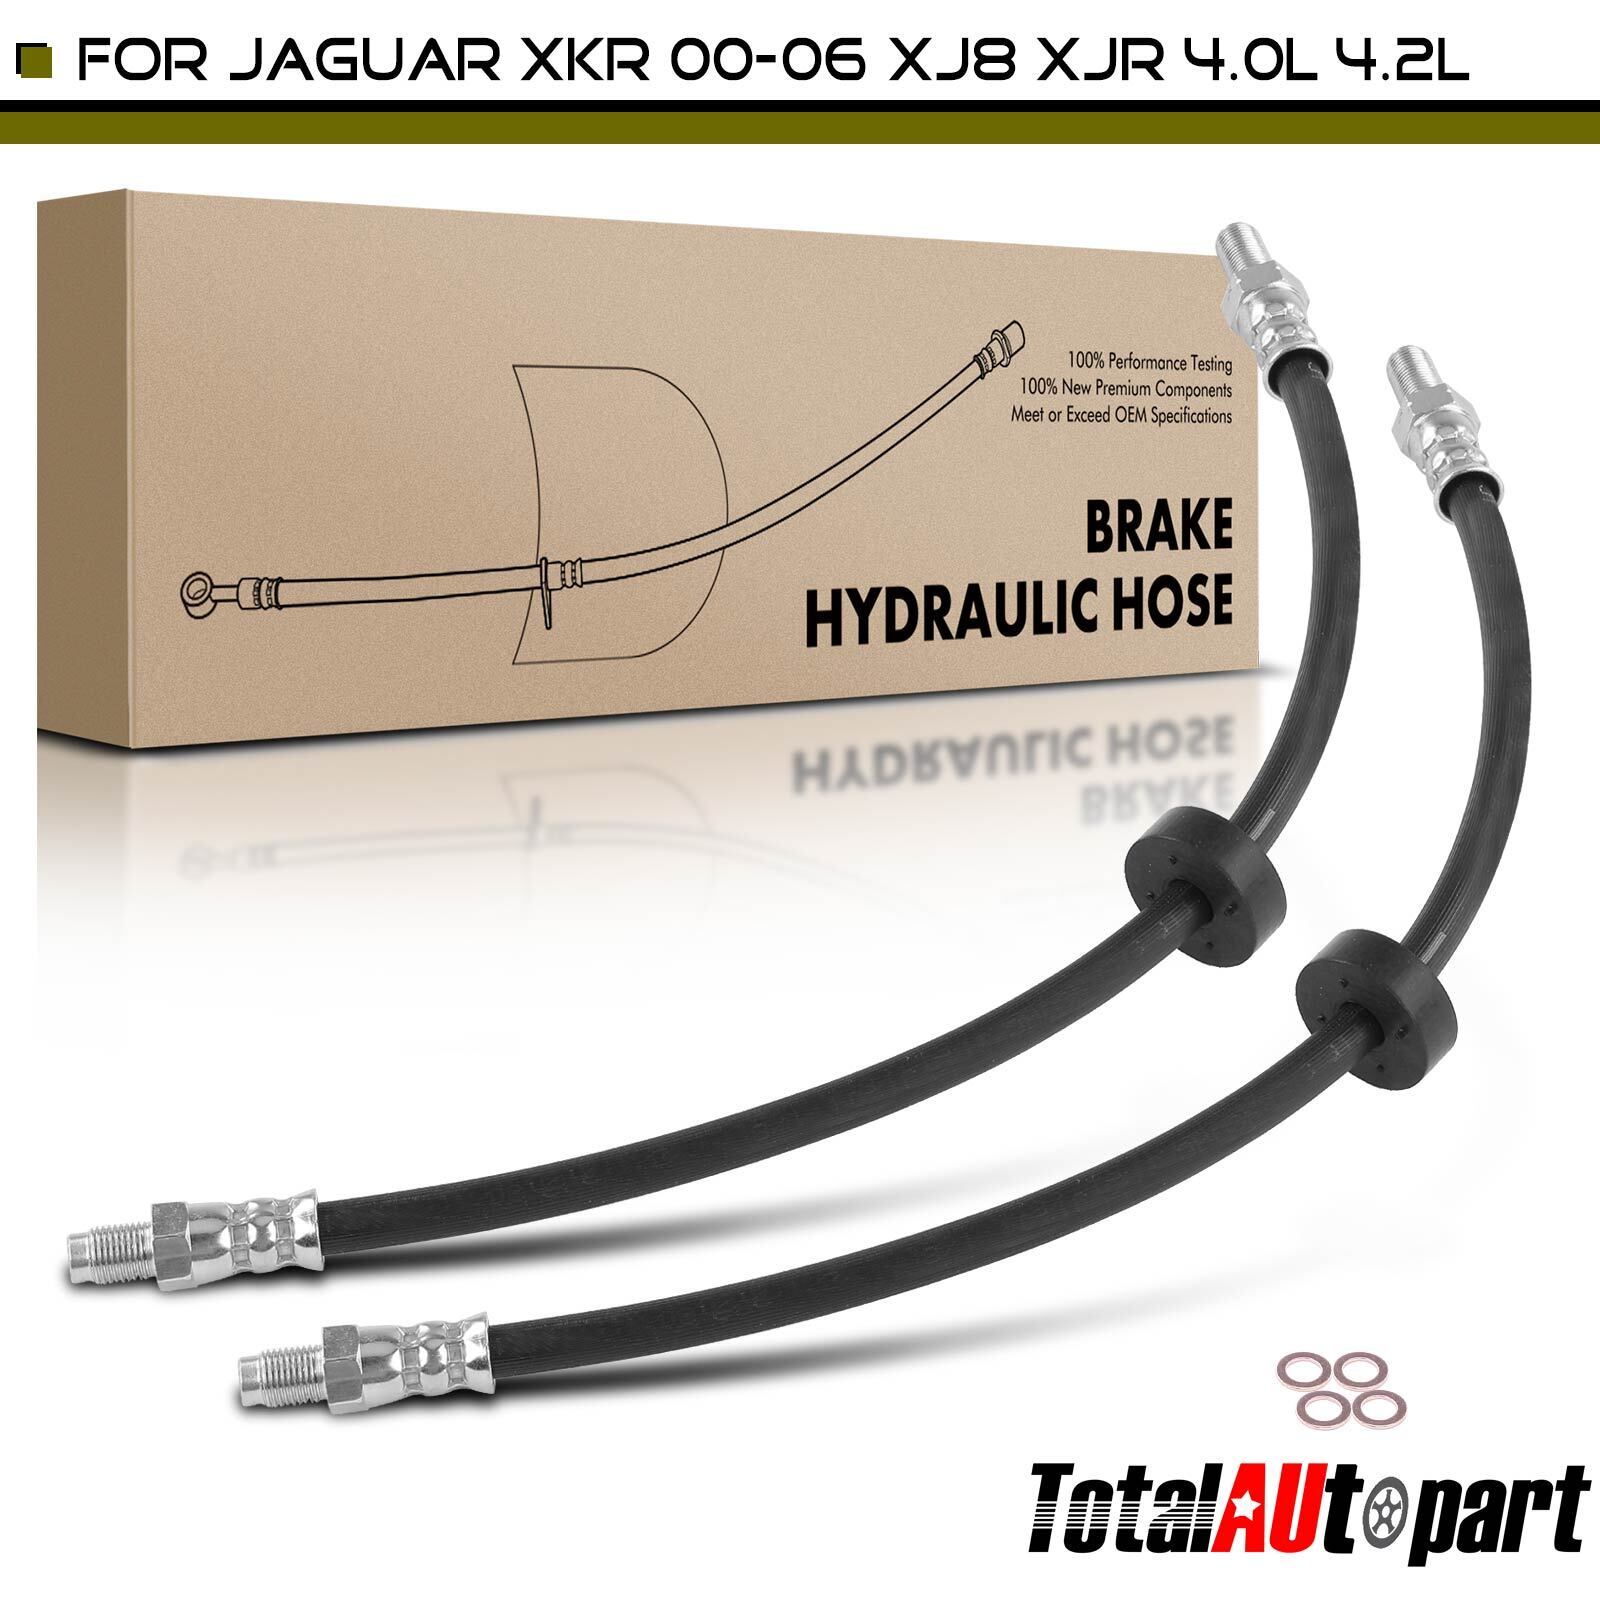 2x Brake Hydraulic Hose for Jaguar Vanden Plas XJ8 98-03 XJR Front Left & Right